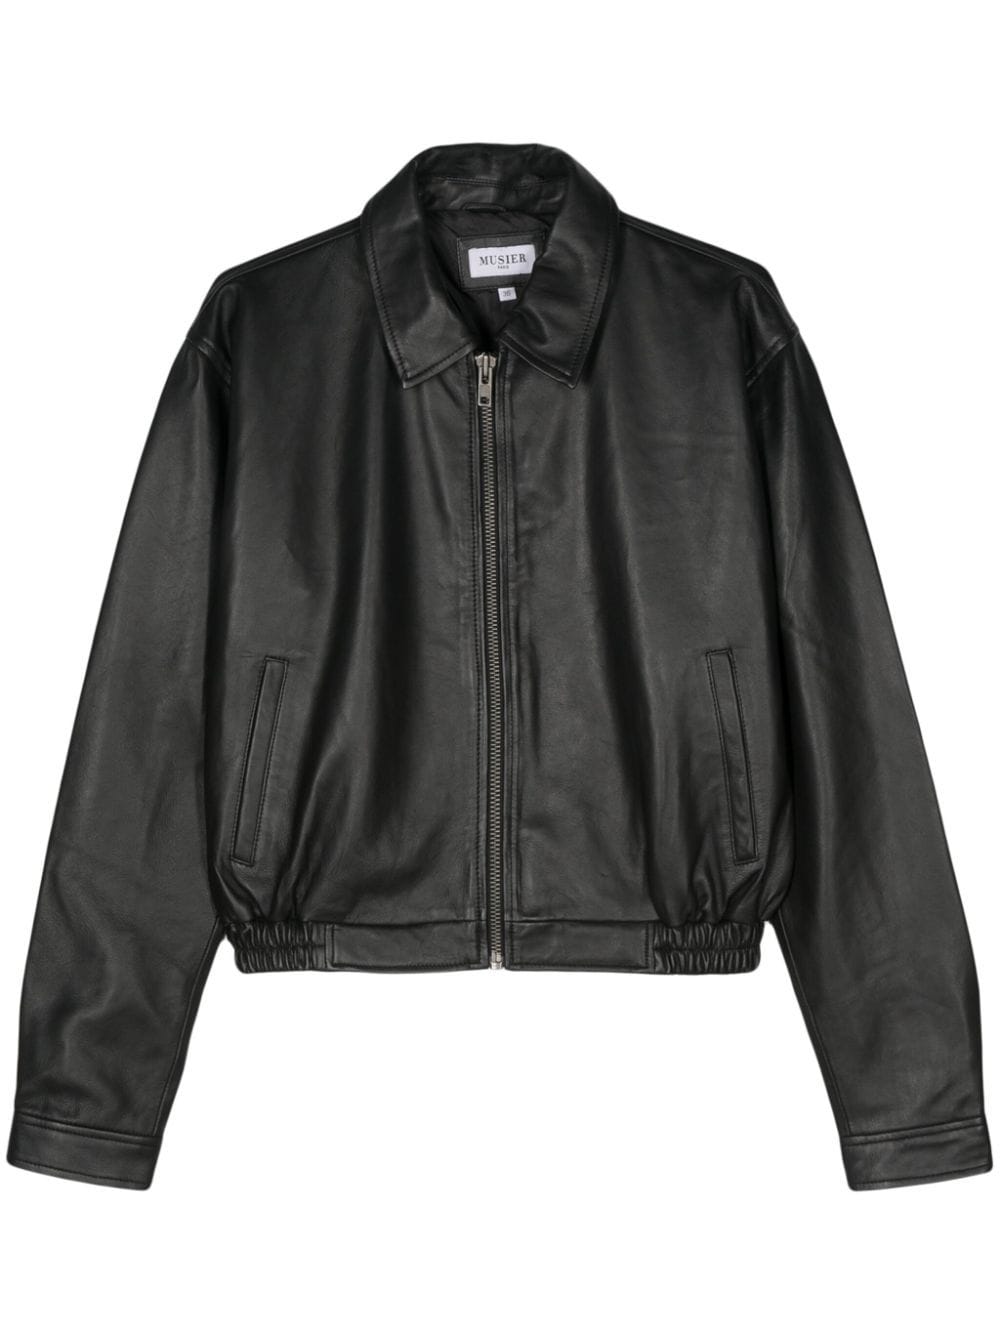 Musier Fresca Leather Bomber Jacket In Black